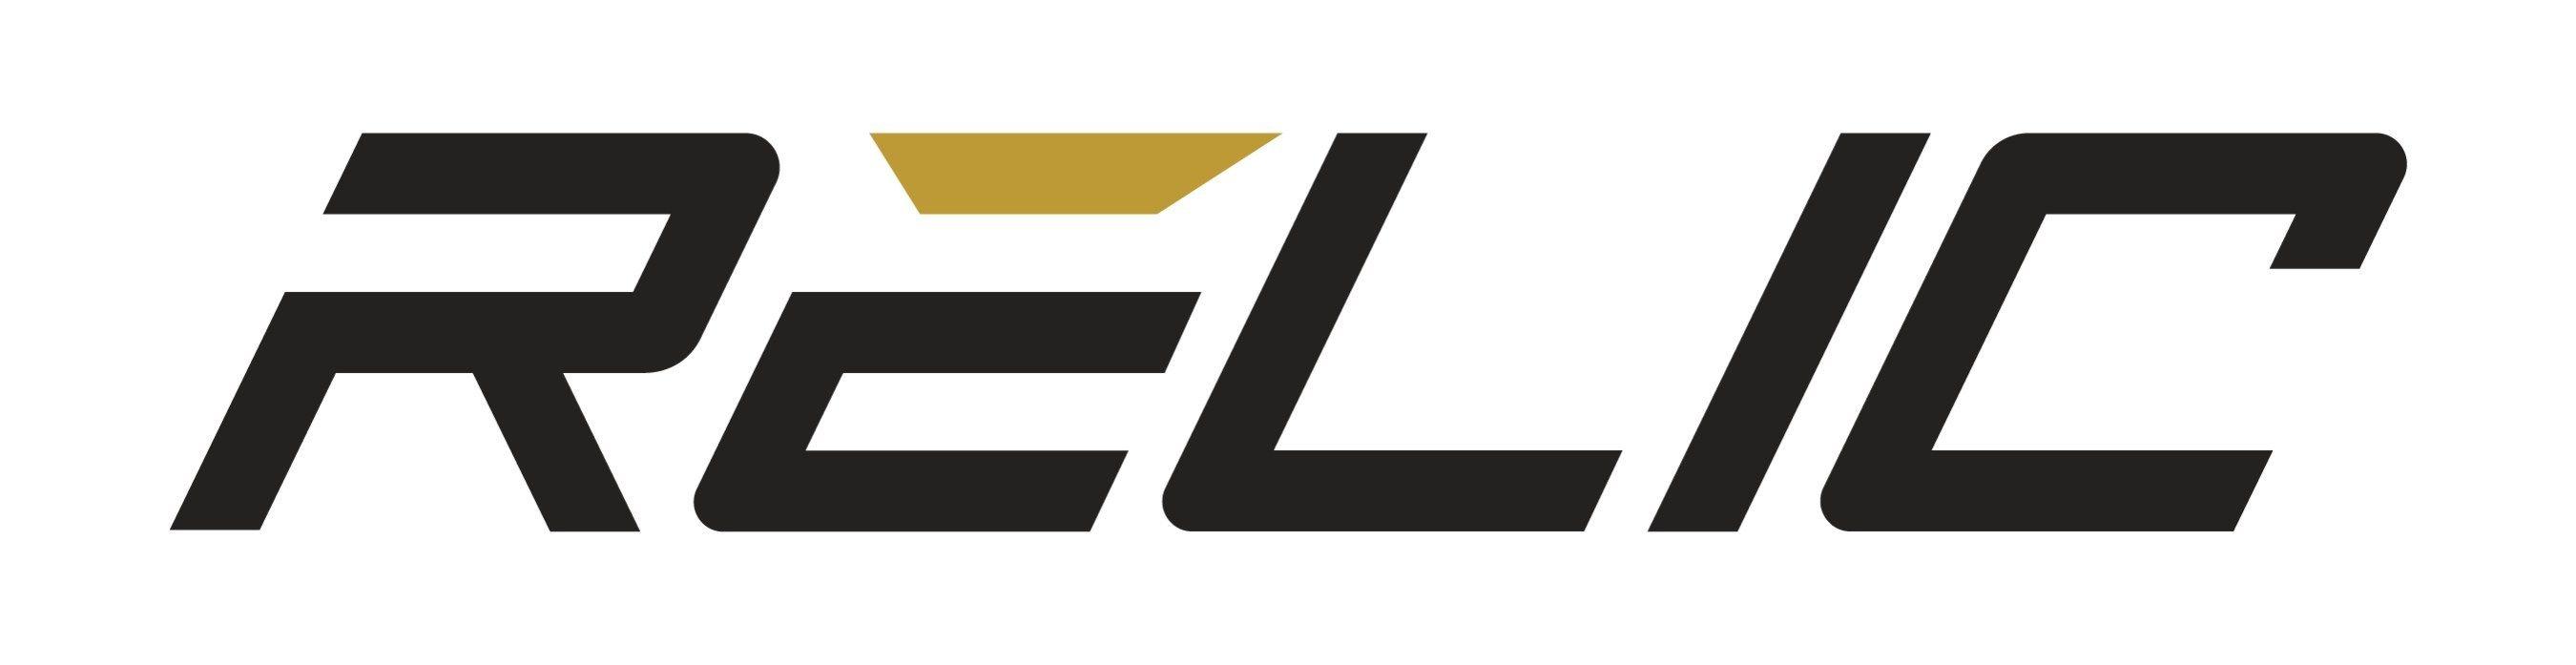 Relic Logo - Advertising agency Sorenson rebrands as Relic – St George News